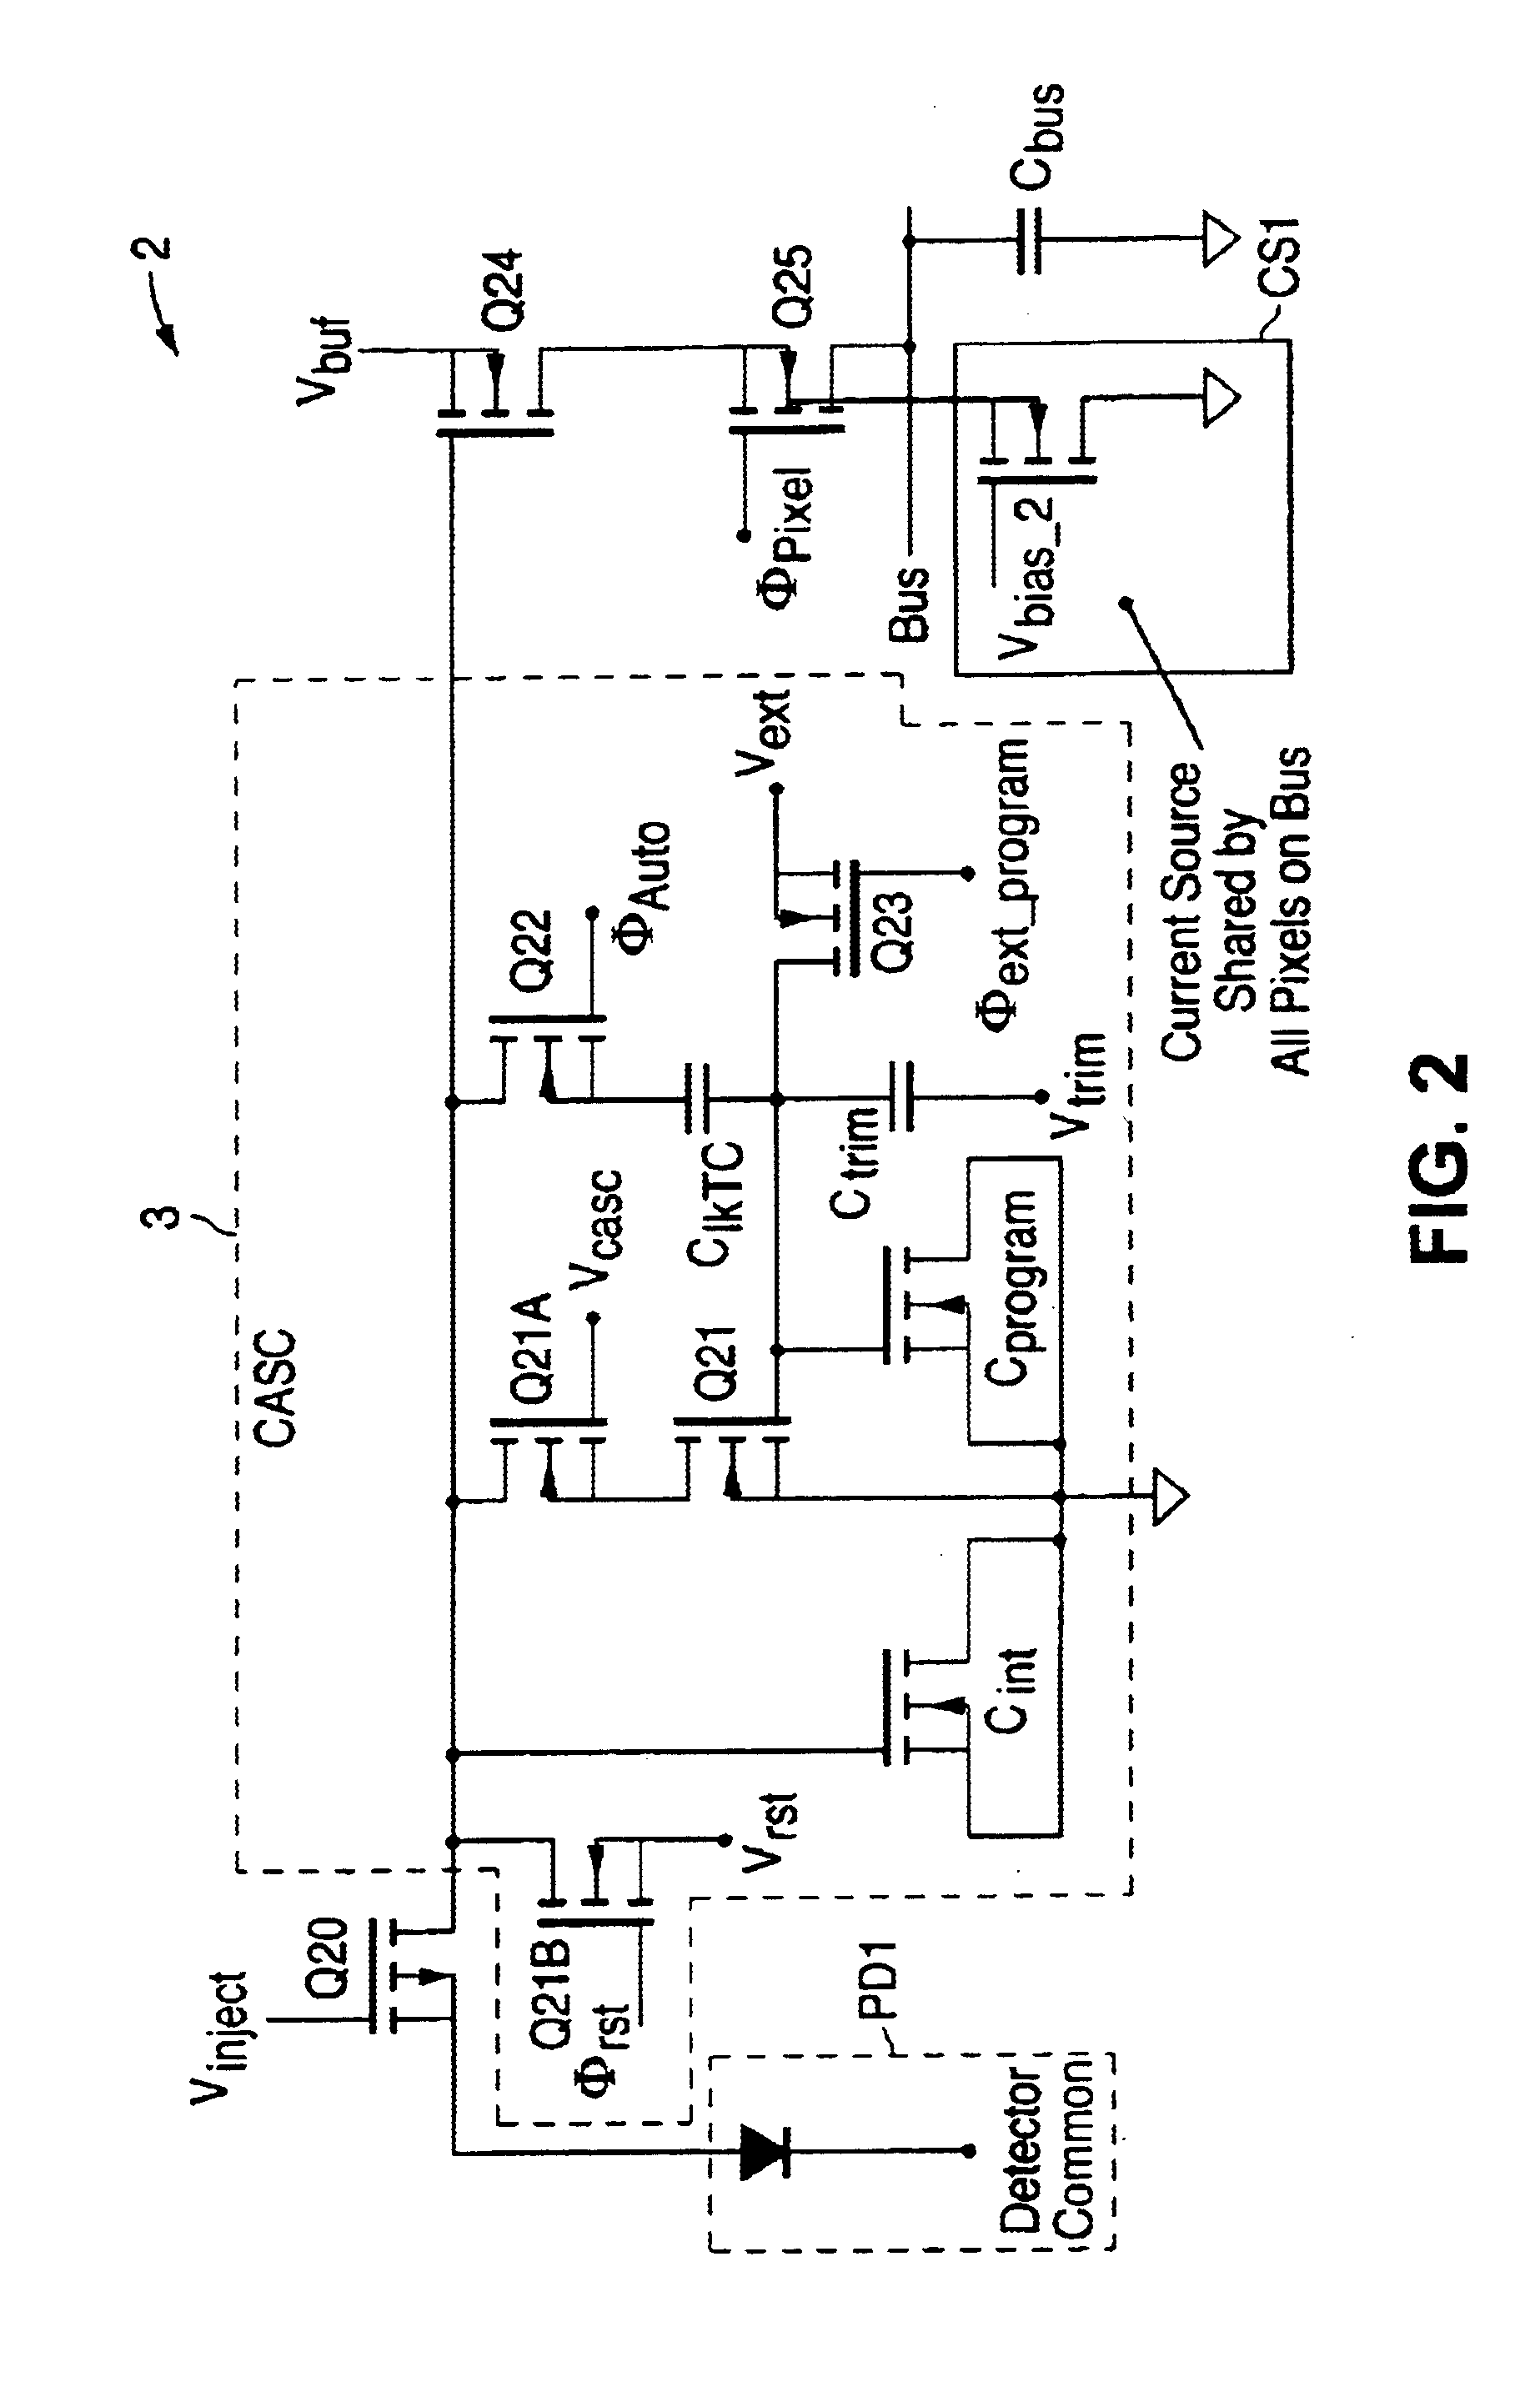 Self-adjusting, adaptive, minimal noise input amplifier circuit